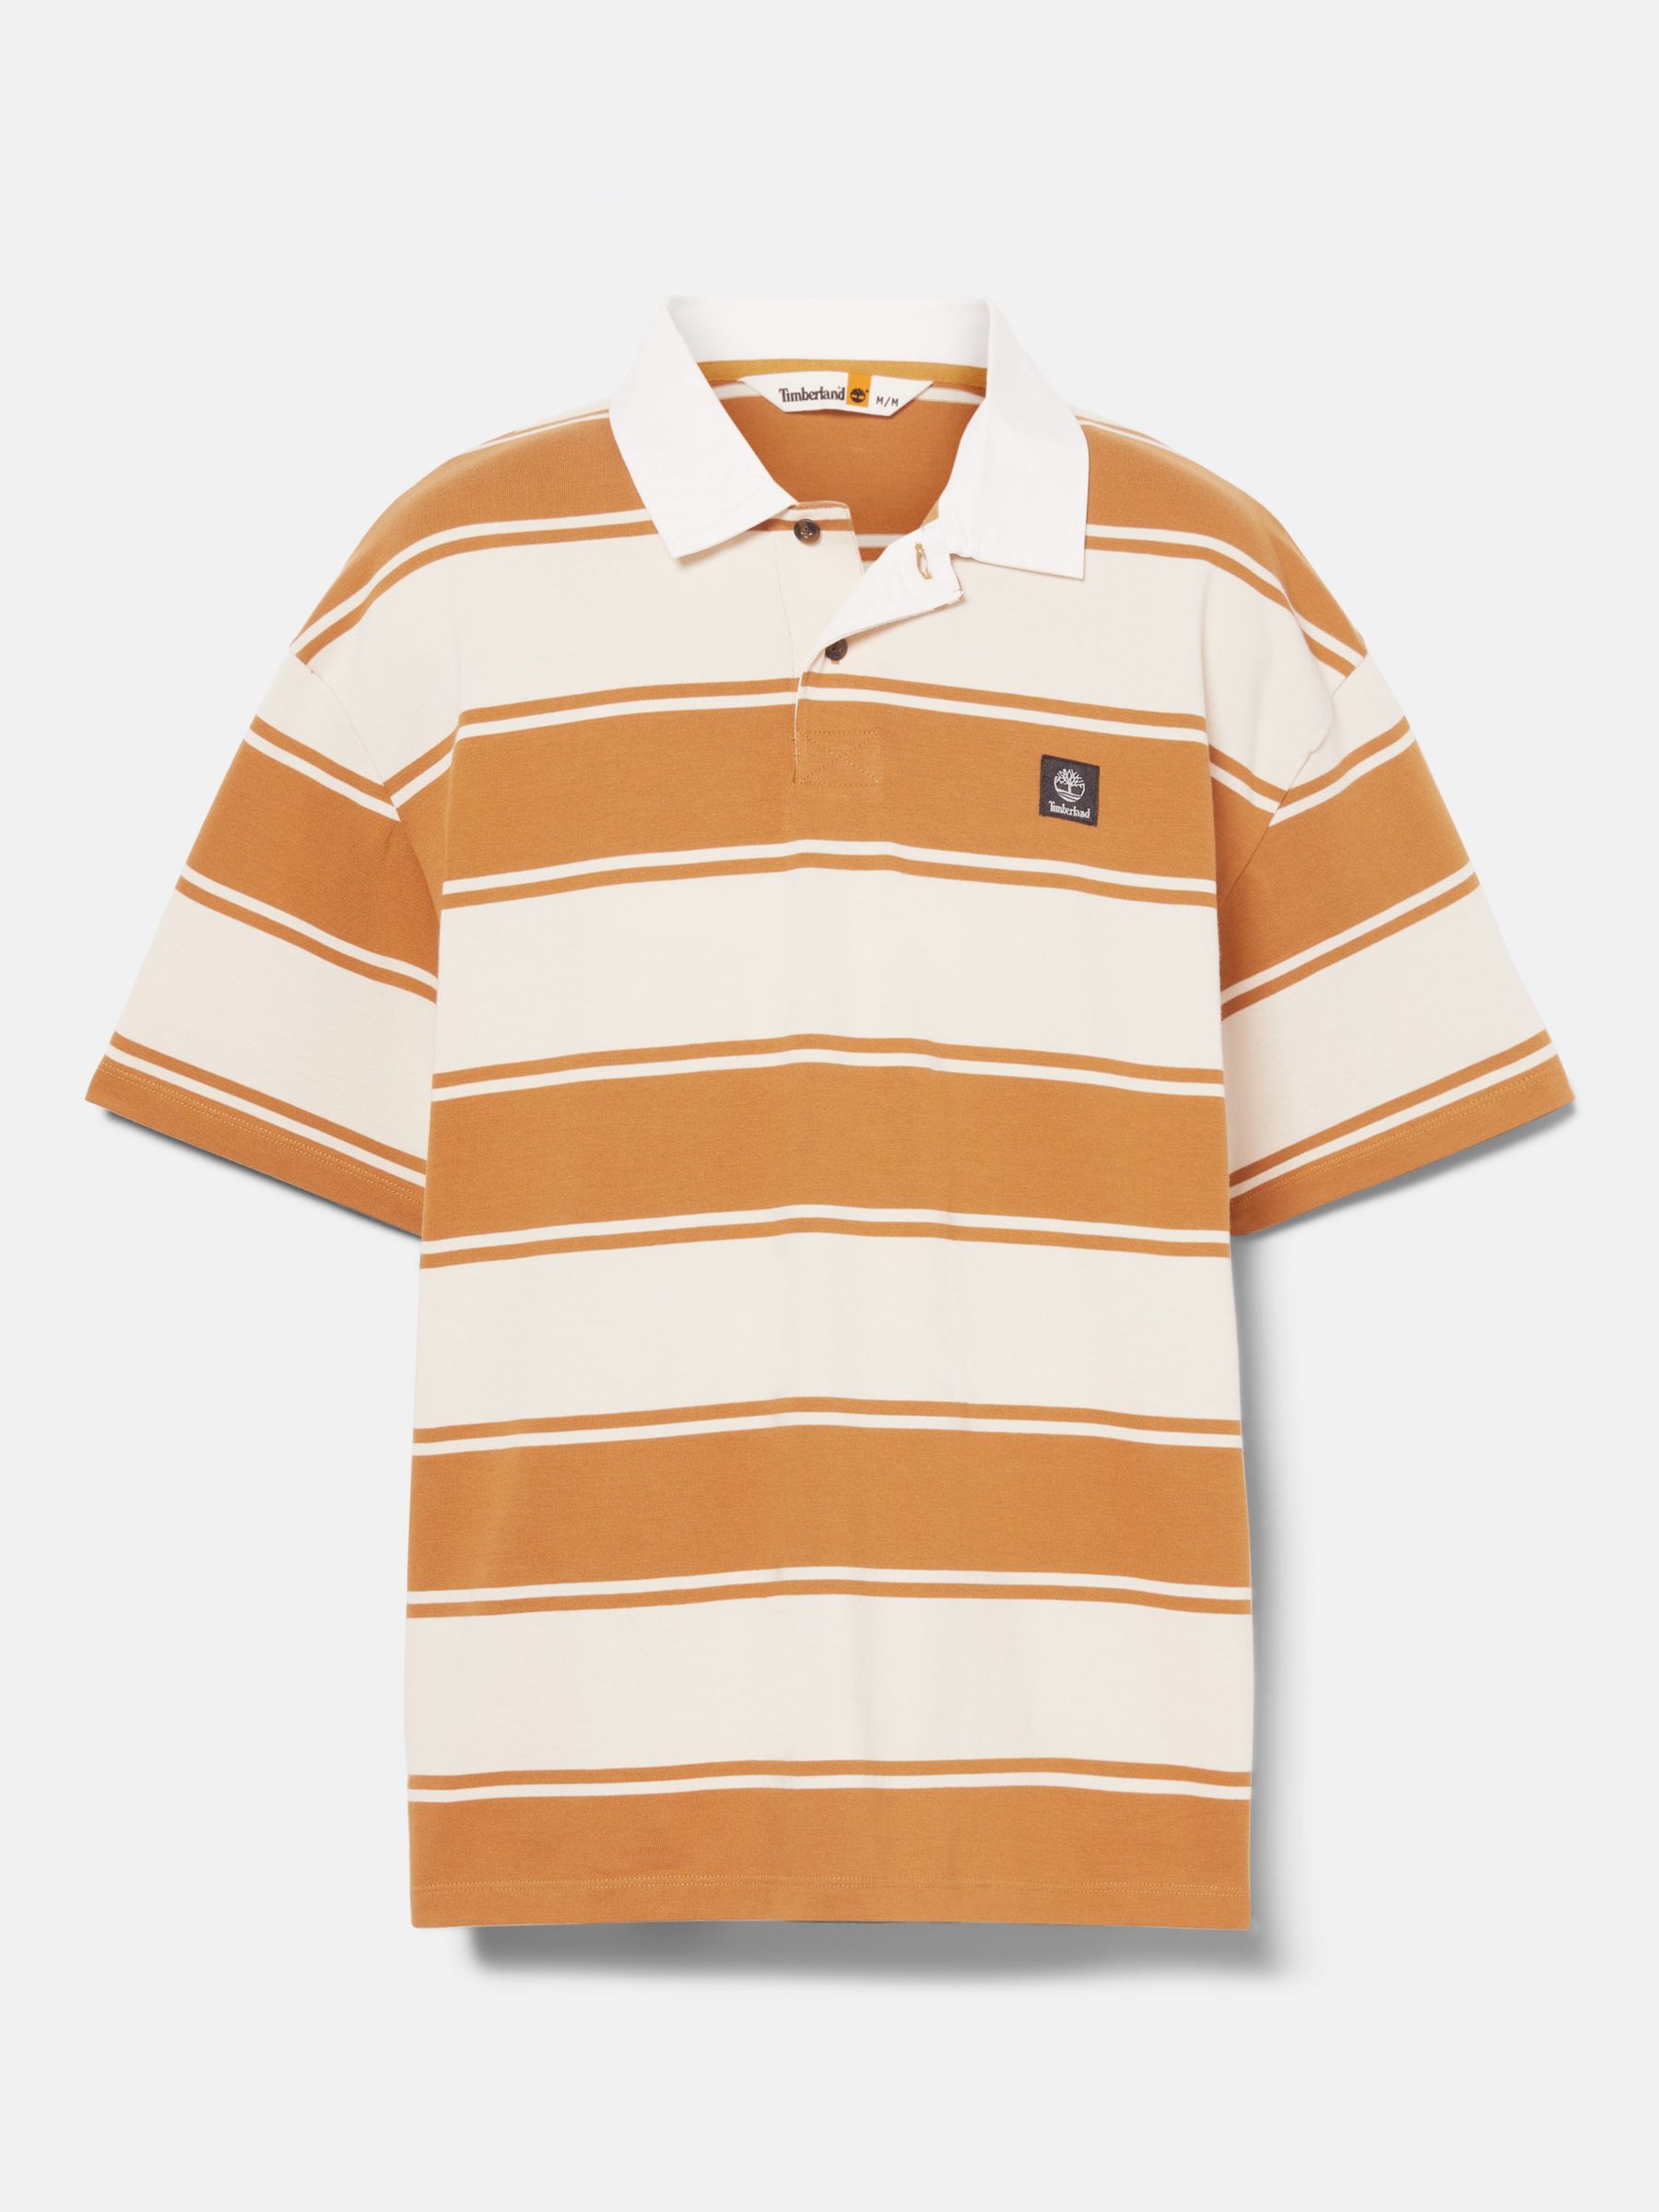 Timberland Stripe Short Sleeve Rugby Shirt, Wheat/Multi, S